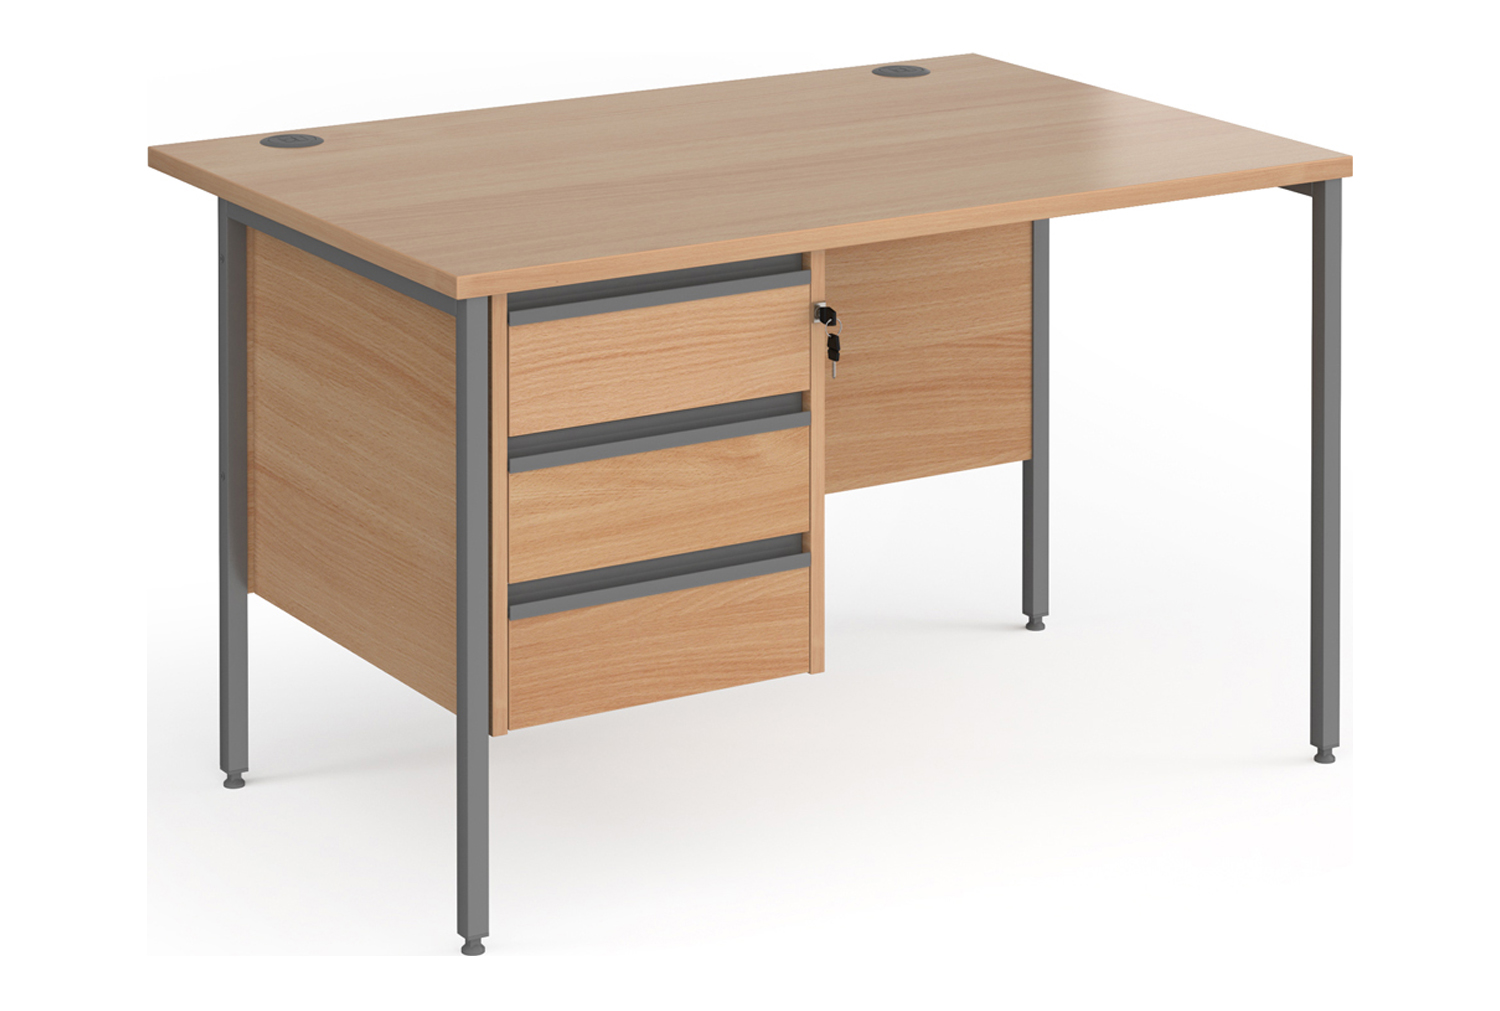 Value Line Classic+ Rectangular H-Leg Office Desk 3 Drawers (Graphite Leg), 120wx80dx73h (cm), Beech, Express Delivery